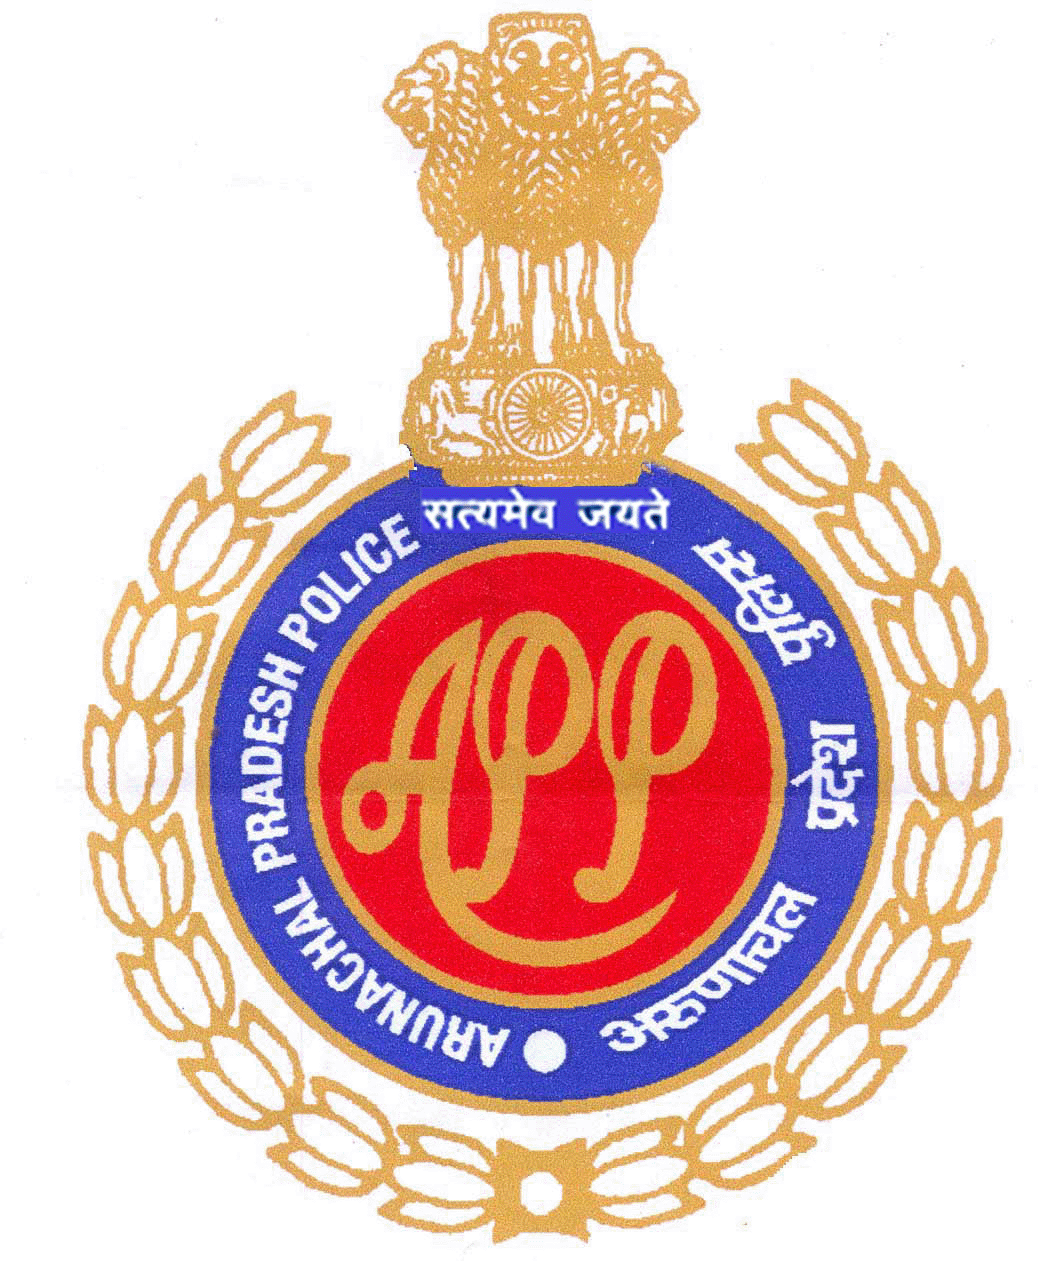 Arunachal Pradesh Police Department Recruitment 2015 - National Emblem Of India (1038x1261)